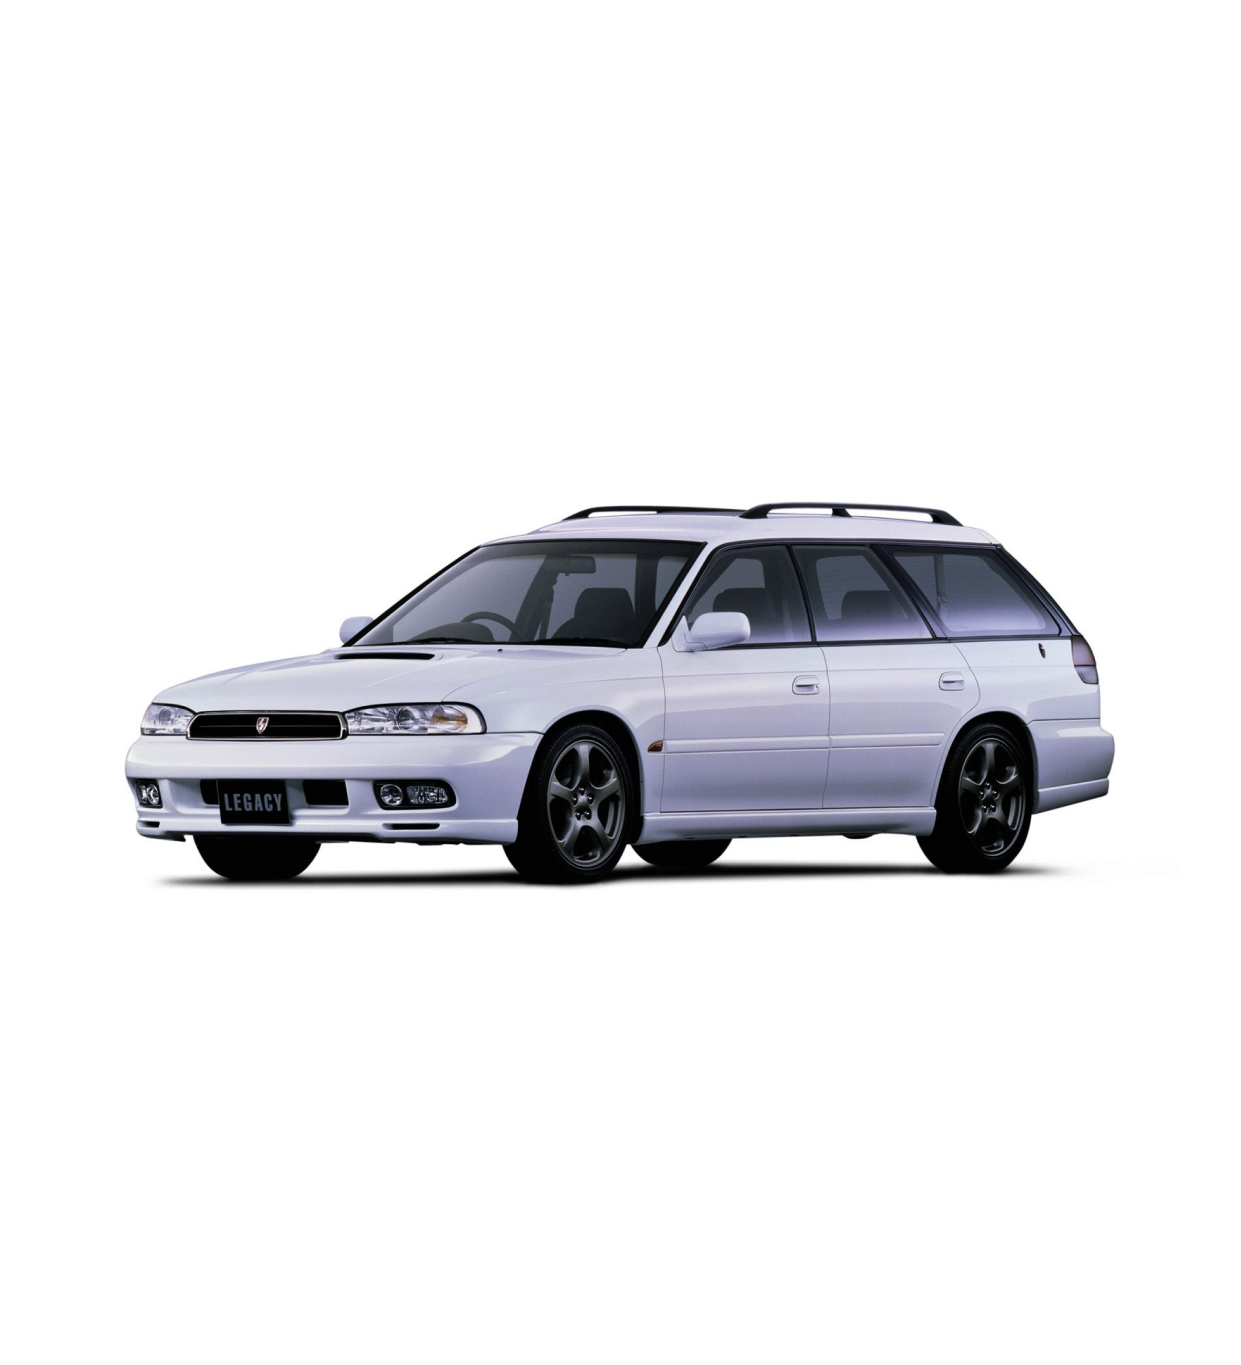 Subaru Legacy 1997 2.0